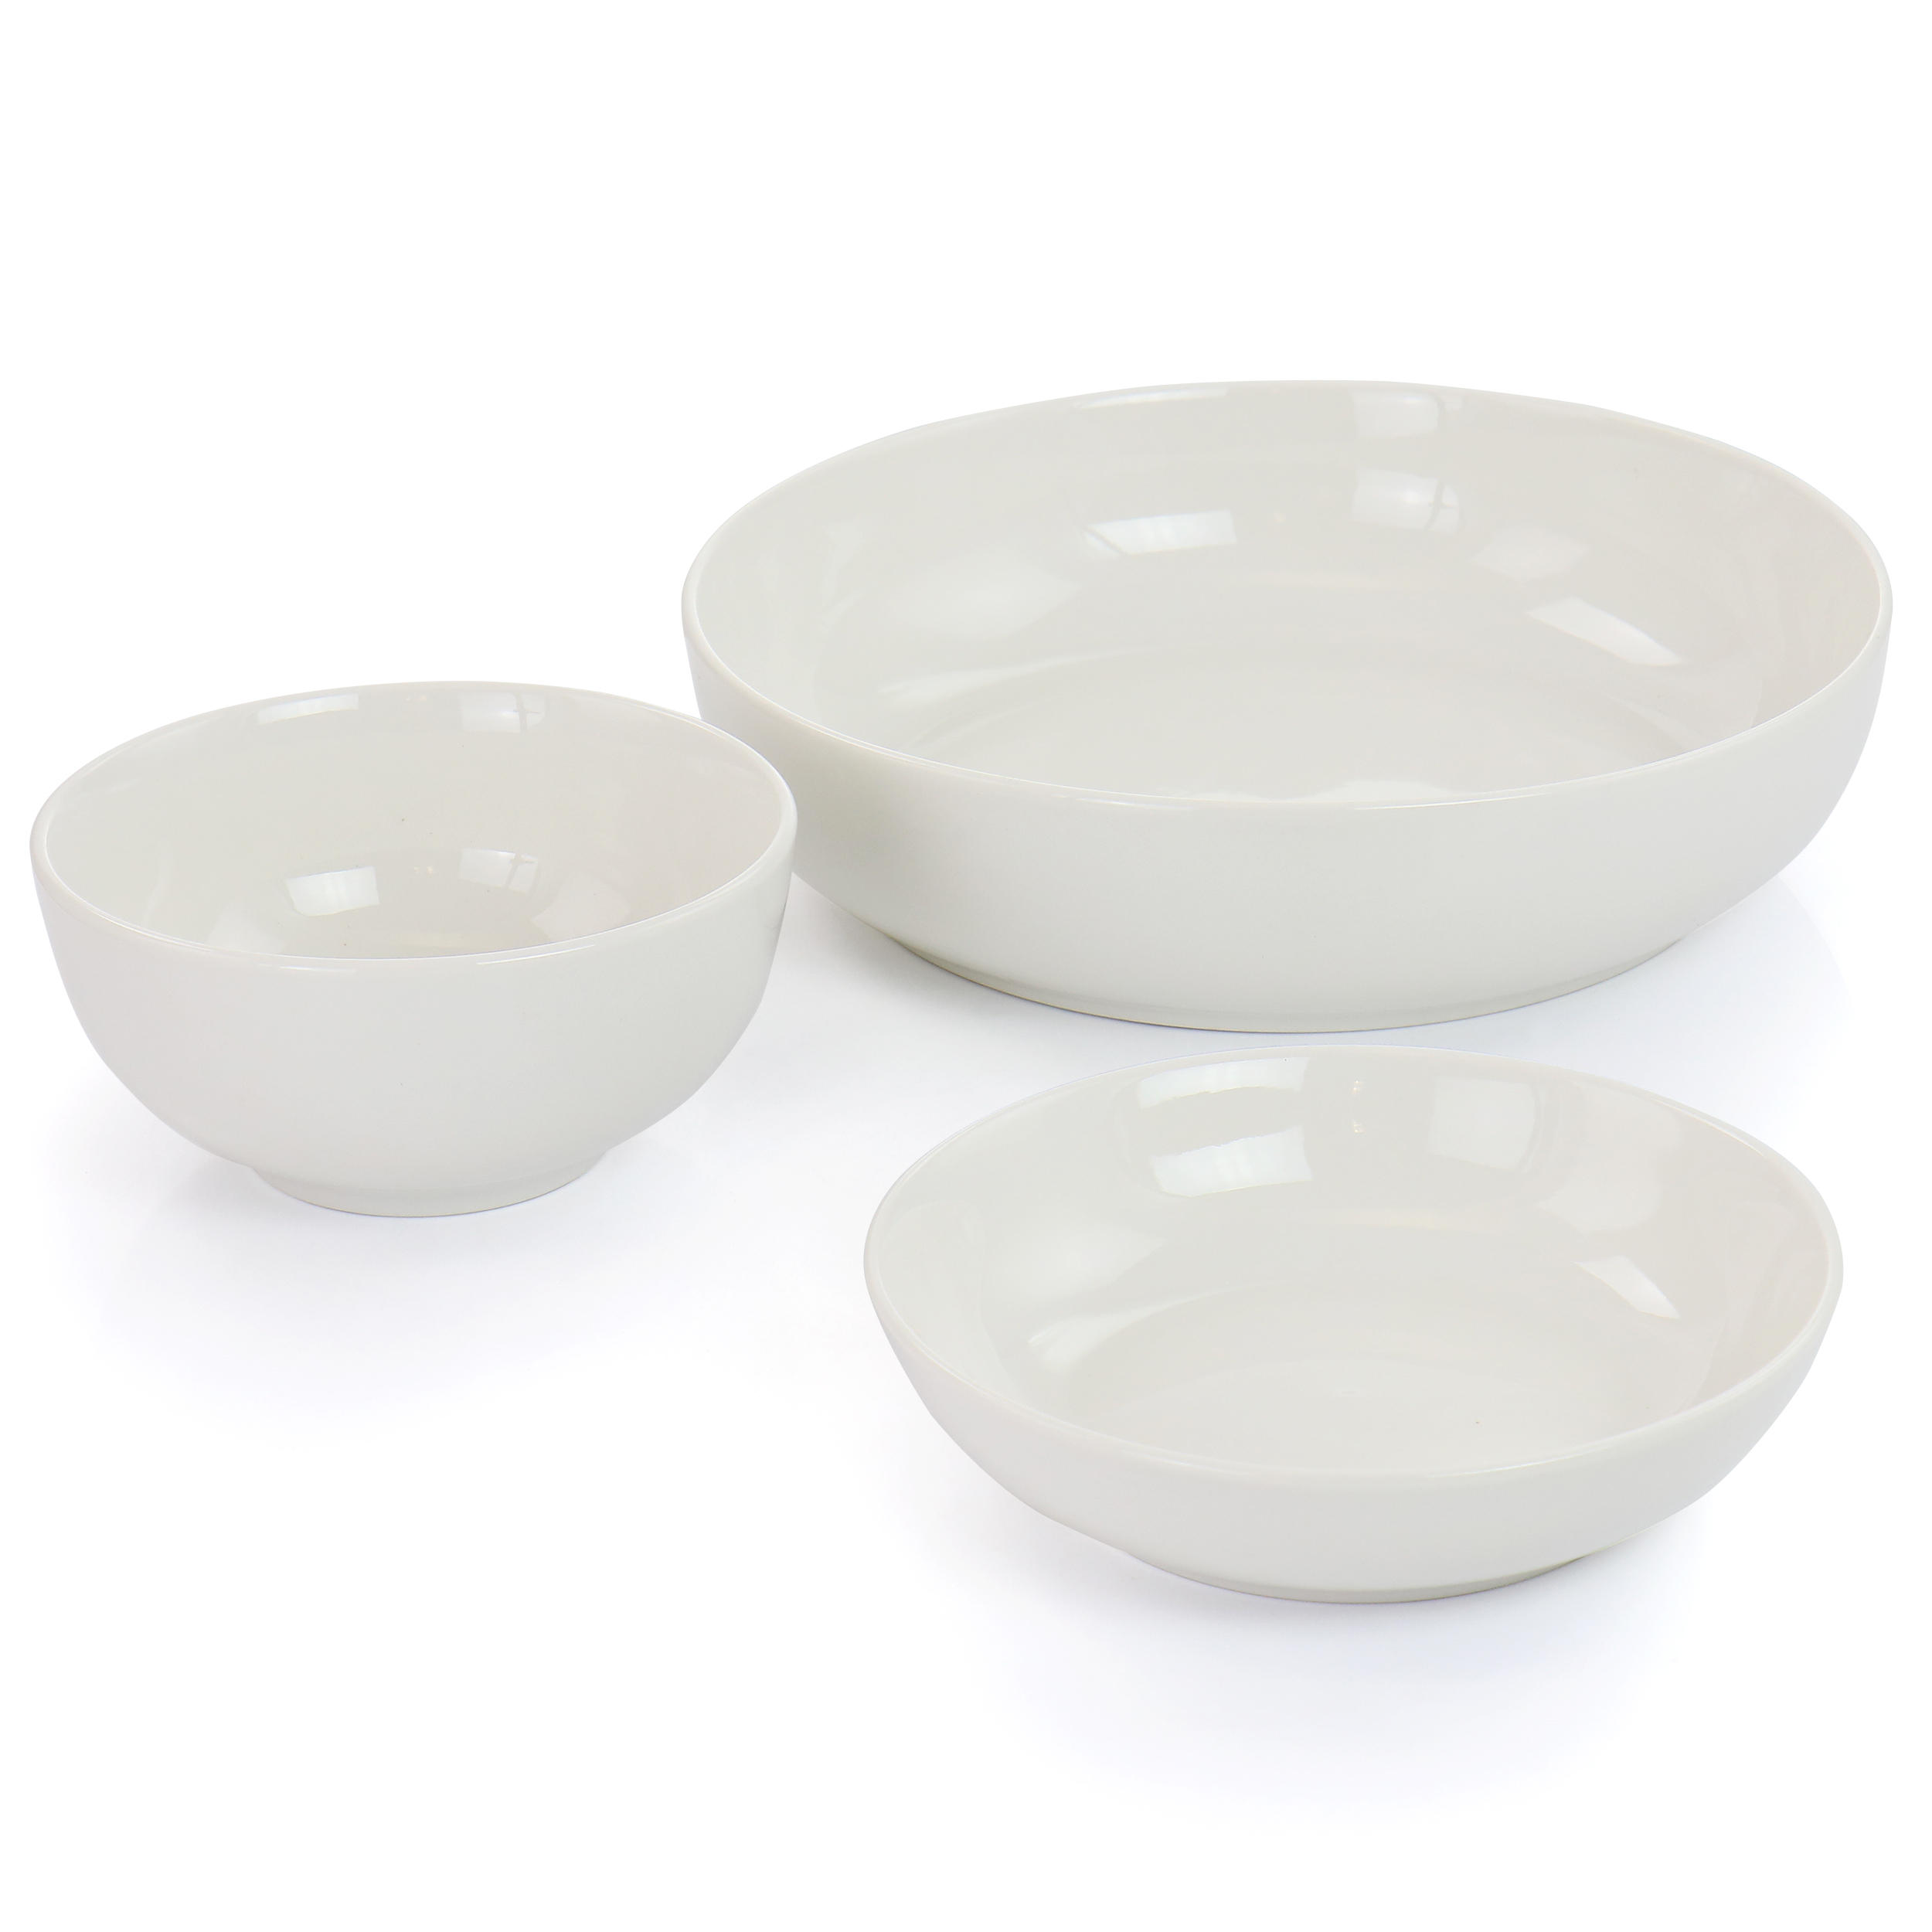 Elama Iris 32 Piece Porcelain Dinnerware Set with 2 Serving Bowls in White